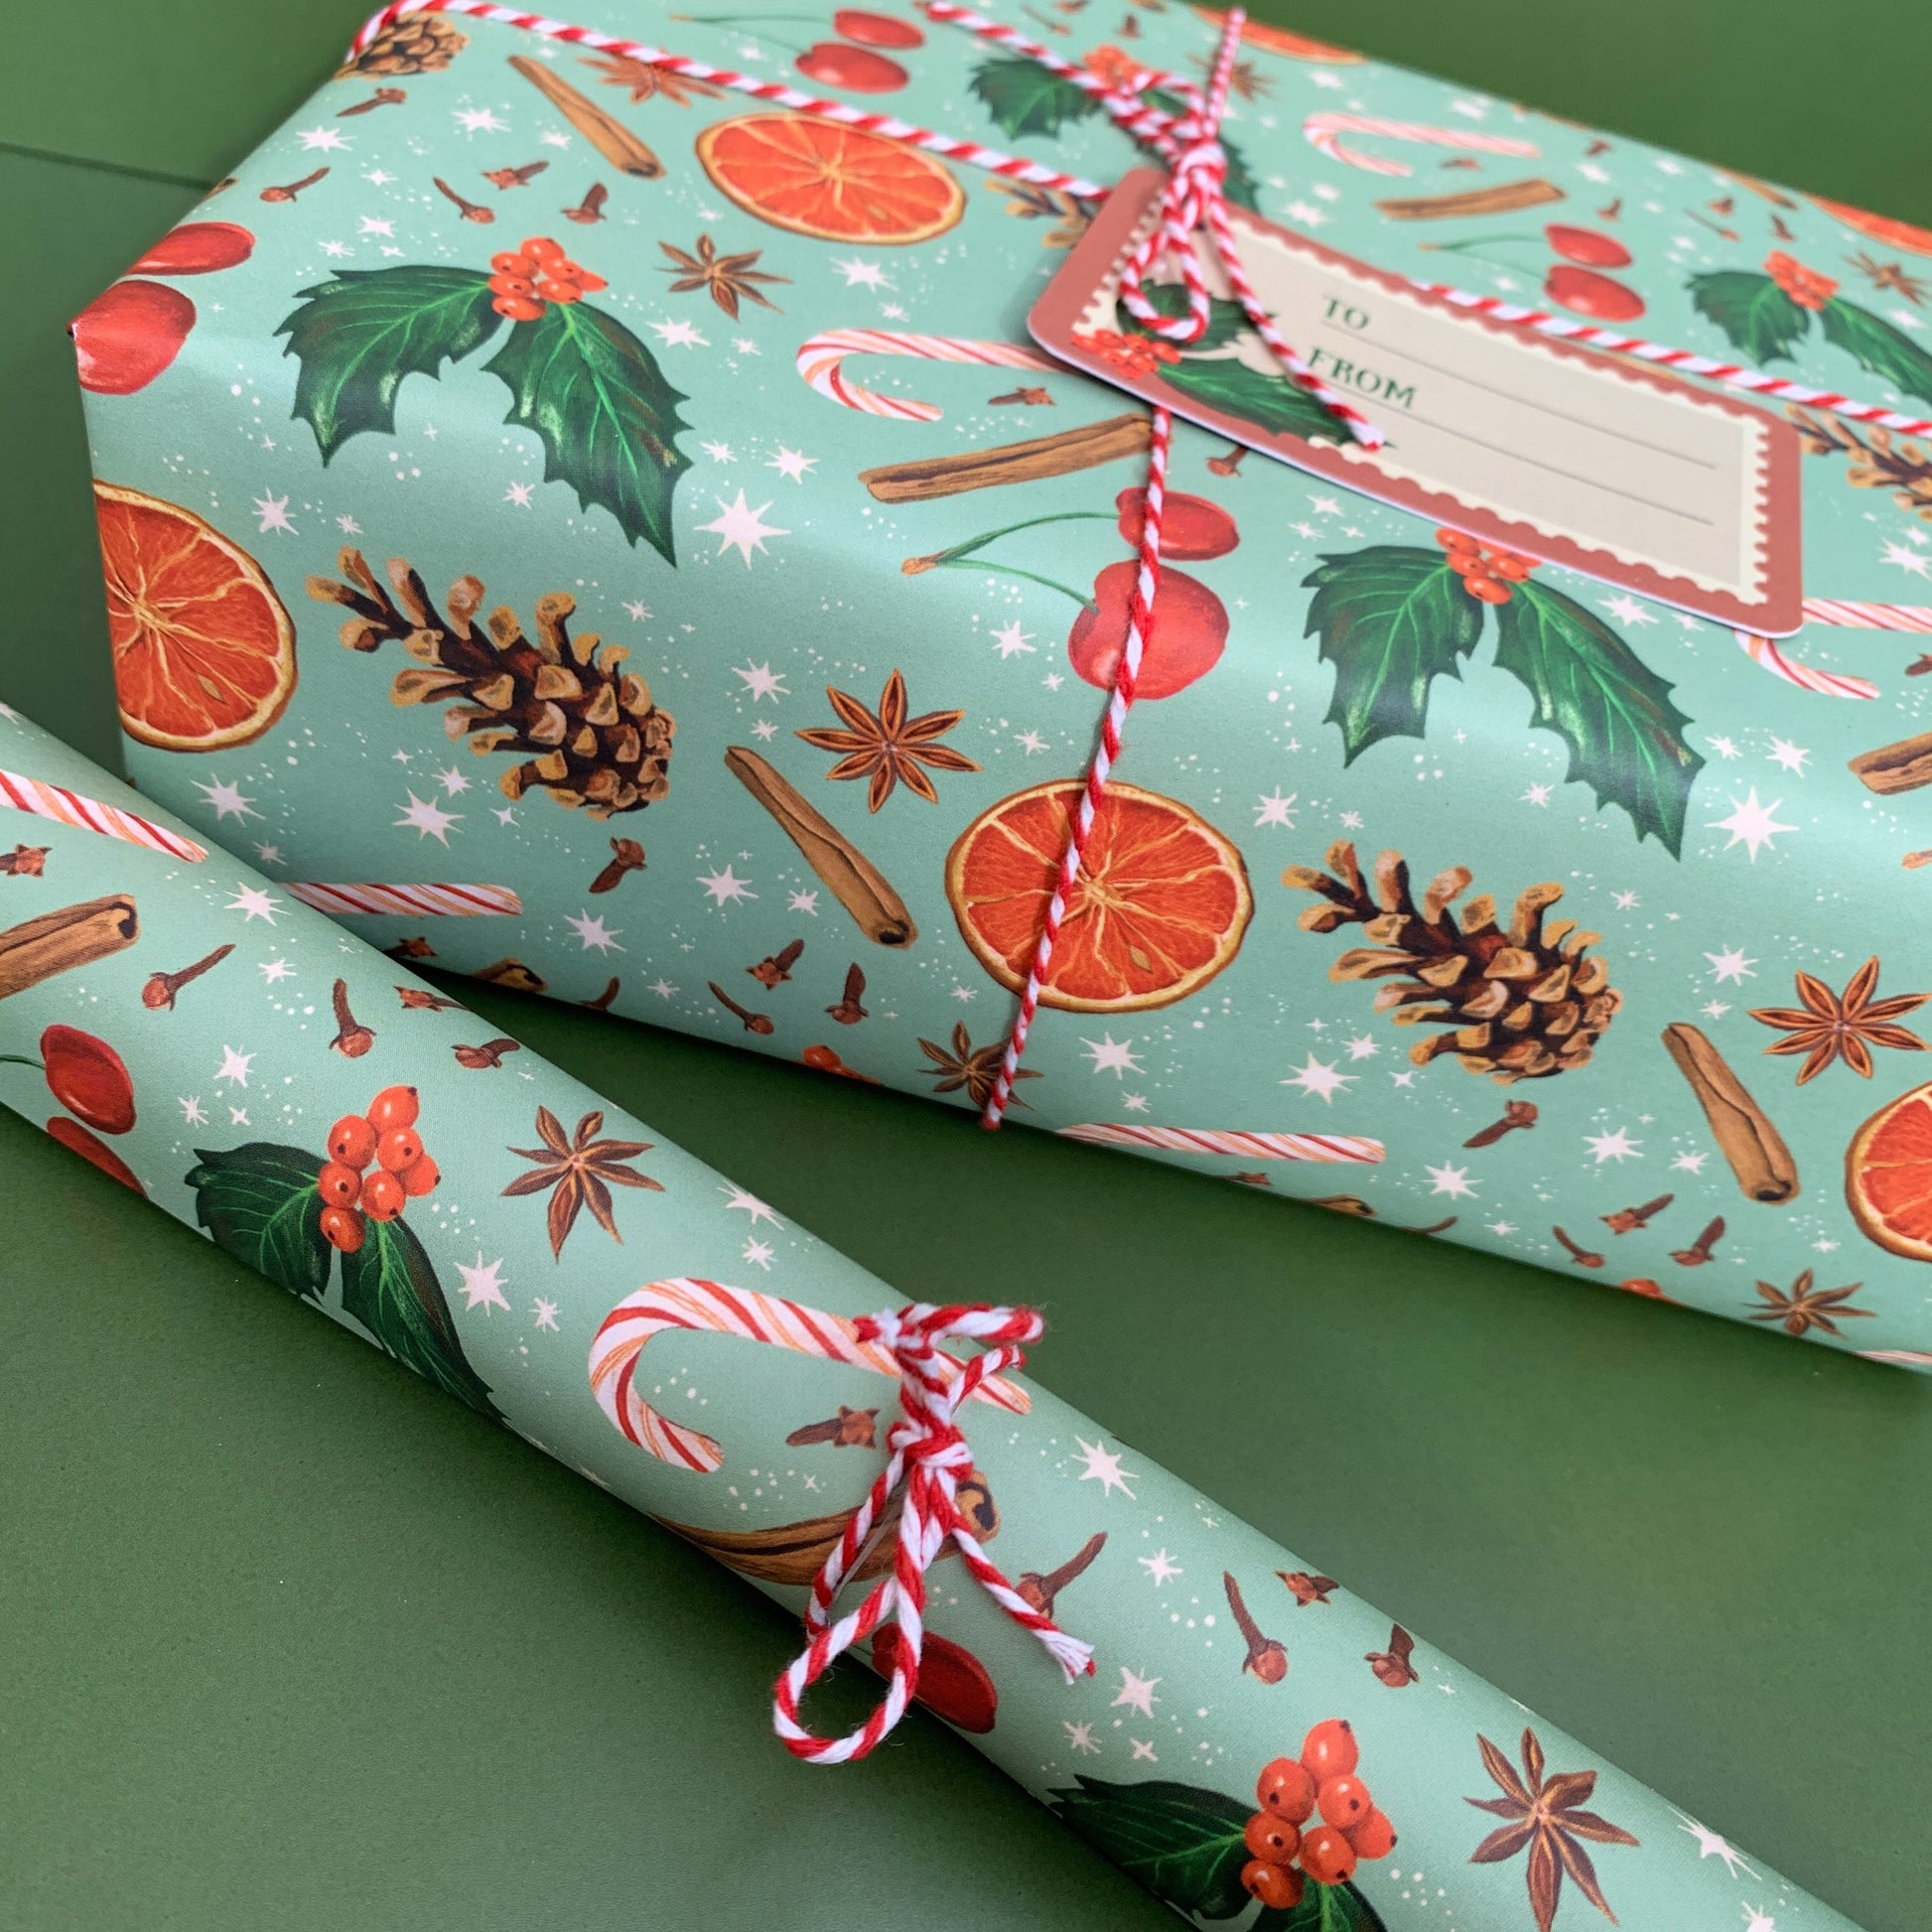 Anna Seed Art | Christmas Wrapping Paper - "Australian Christmas" (Green) - A2 flat sheet